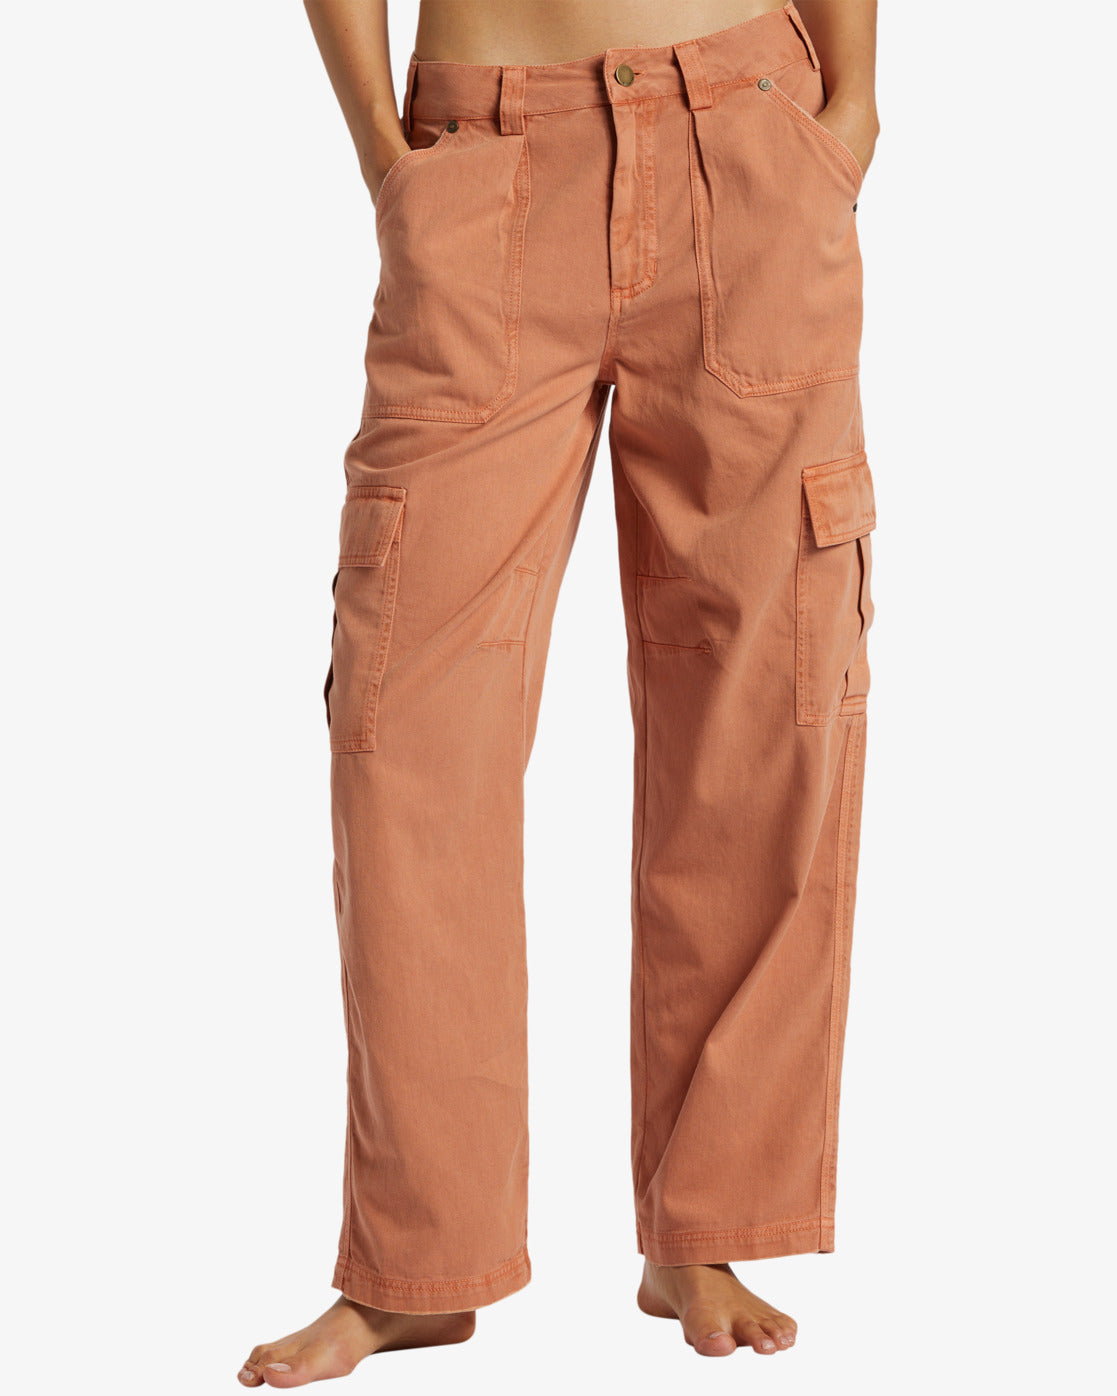 Men's Full Elastic Waist Pants by Falcon Bay | Khaki 40 x 32